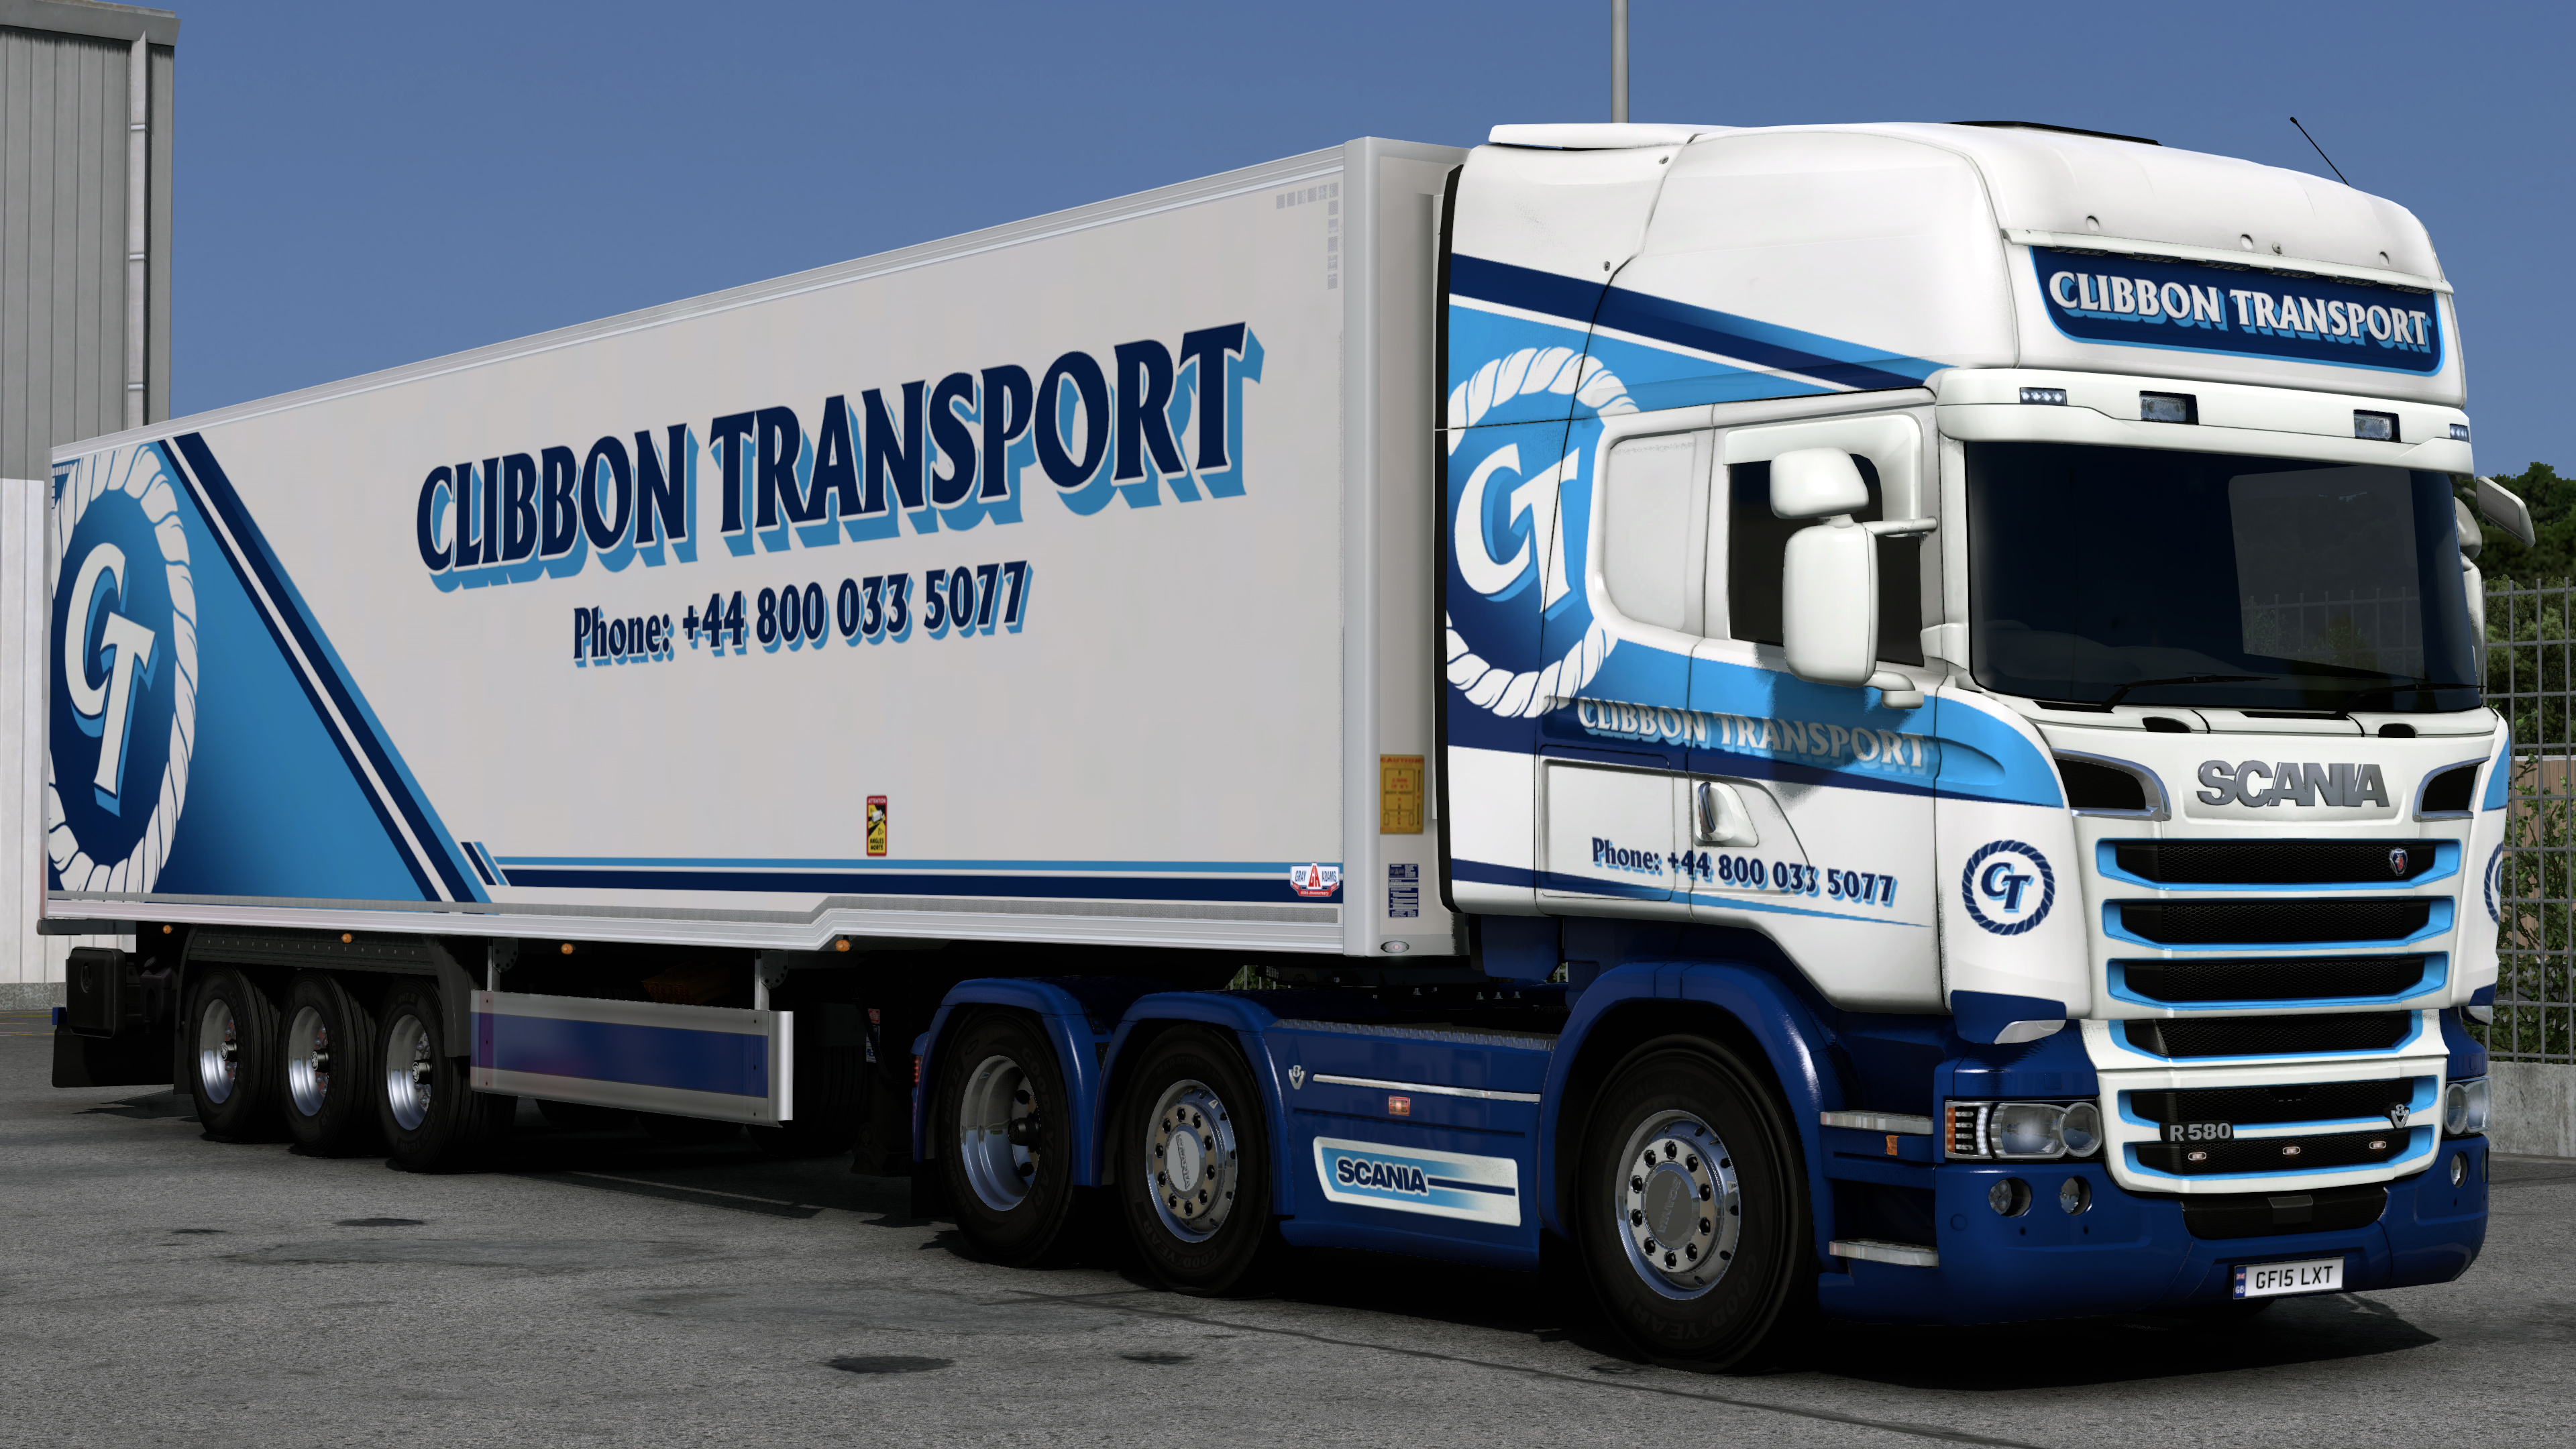 Clibbon Transport